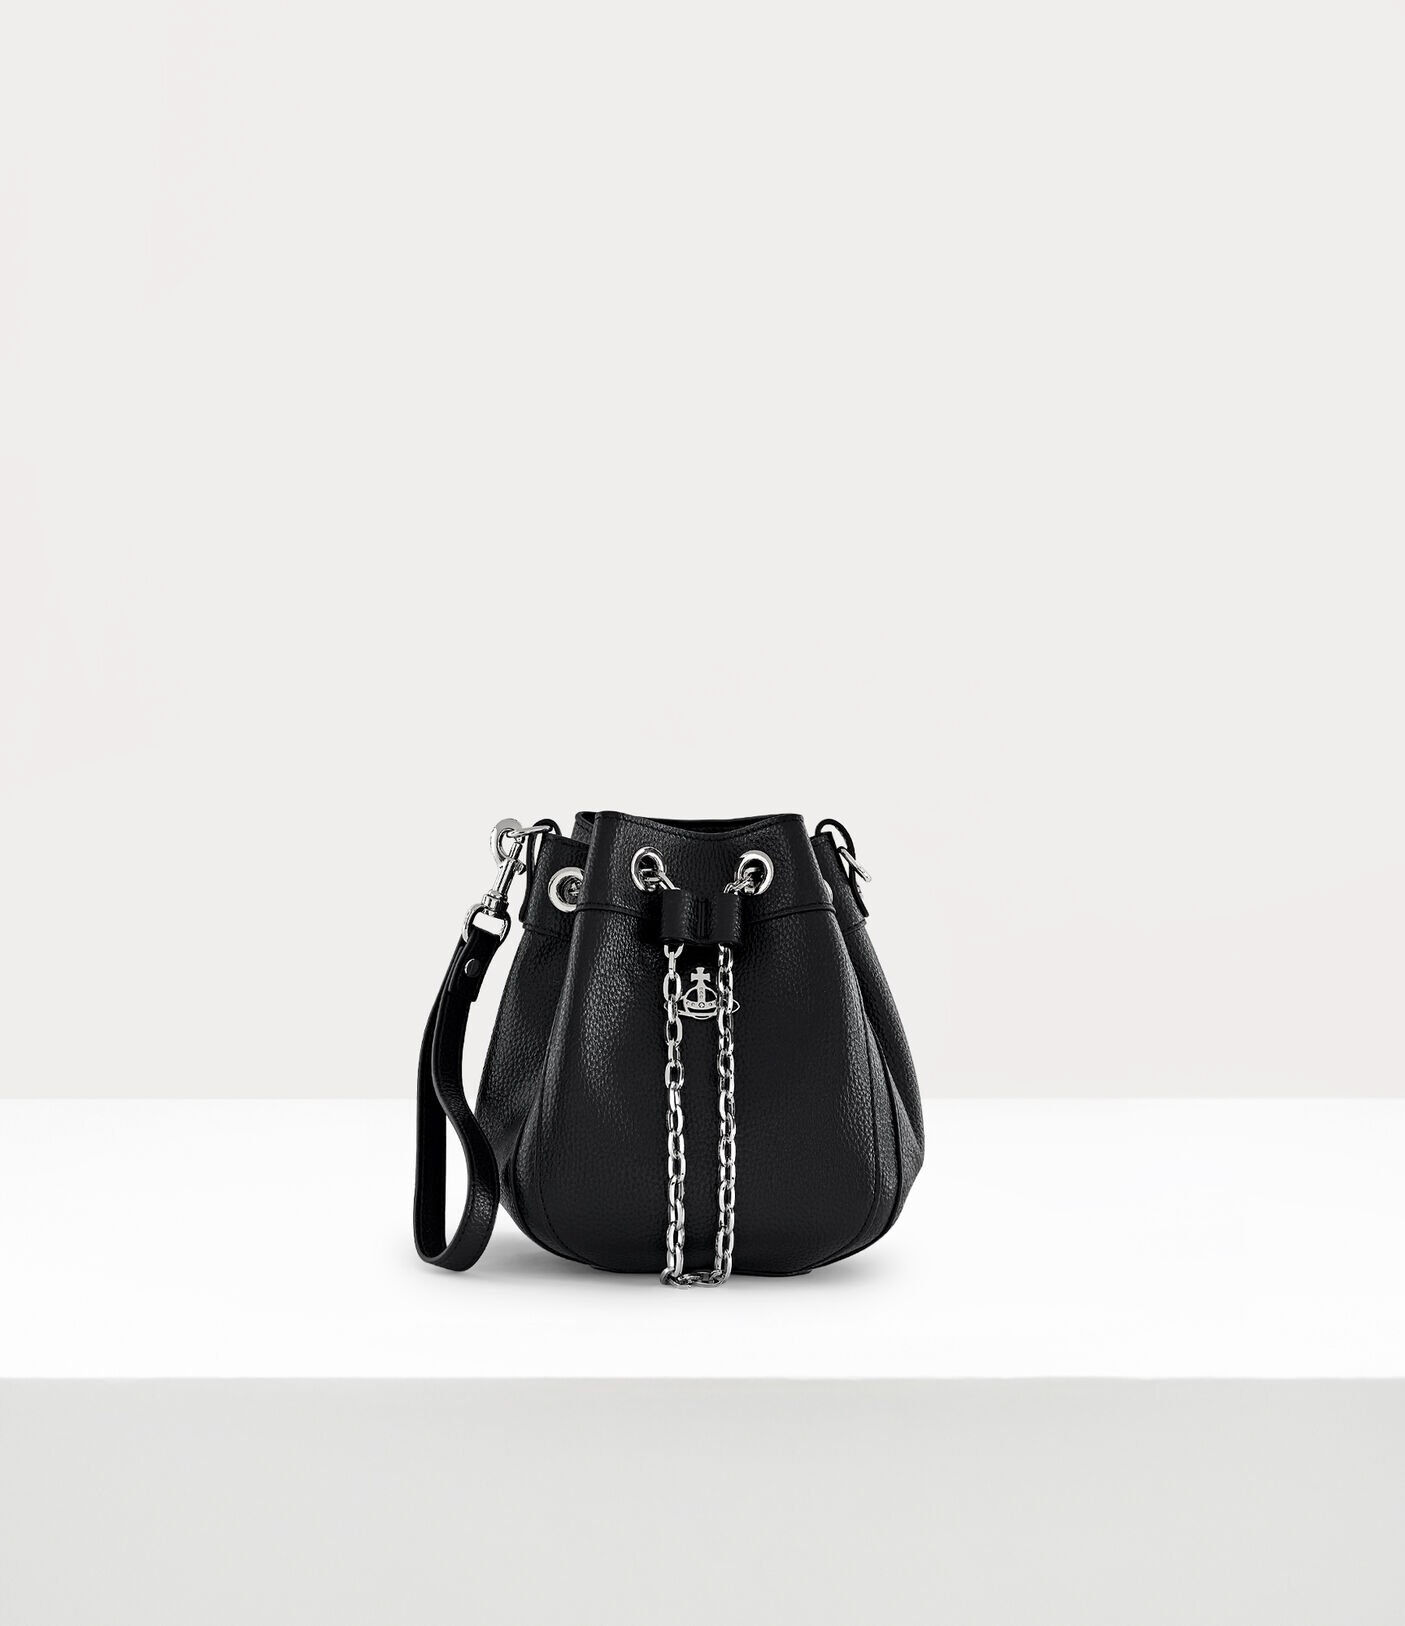 Vivienne Westwood Top Shoulder Mini Bags - Sale Up To 55% off